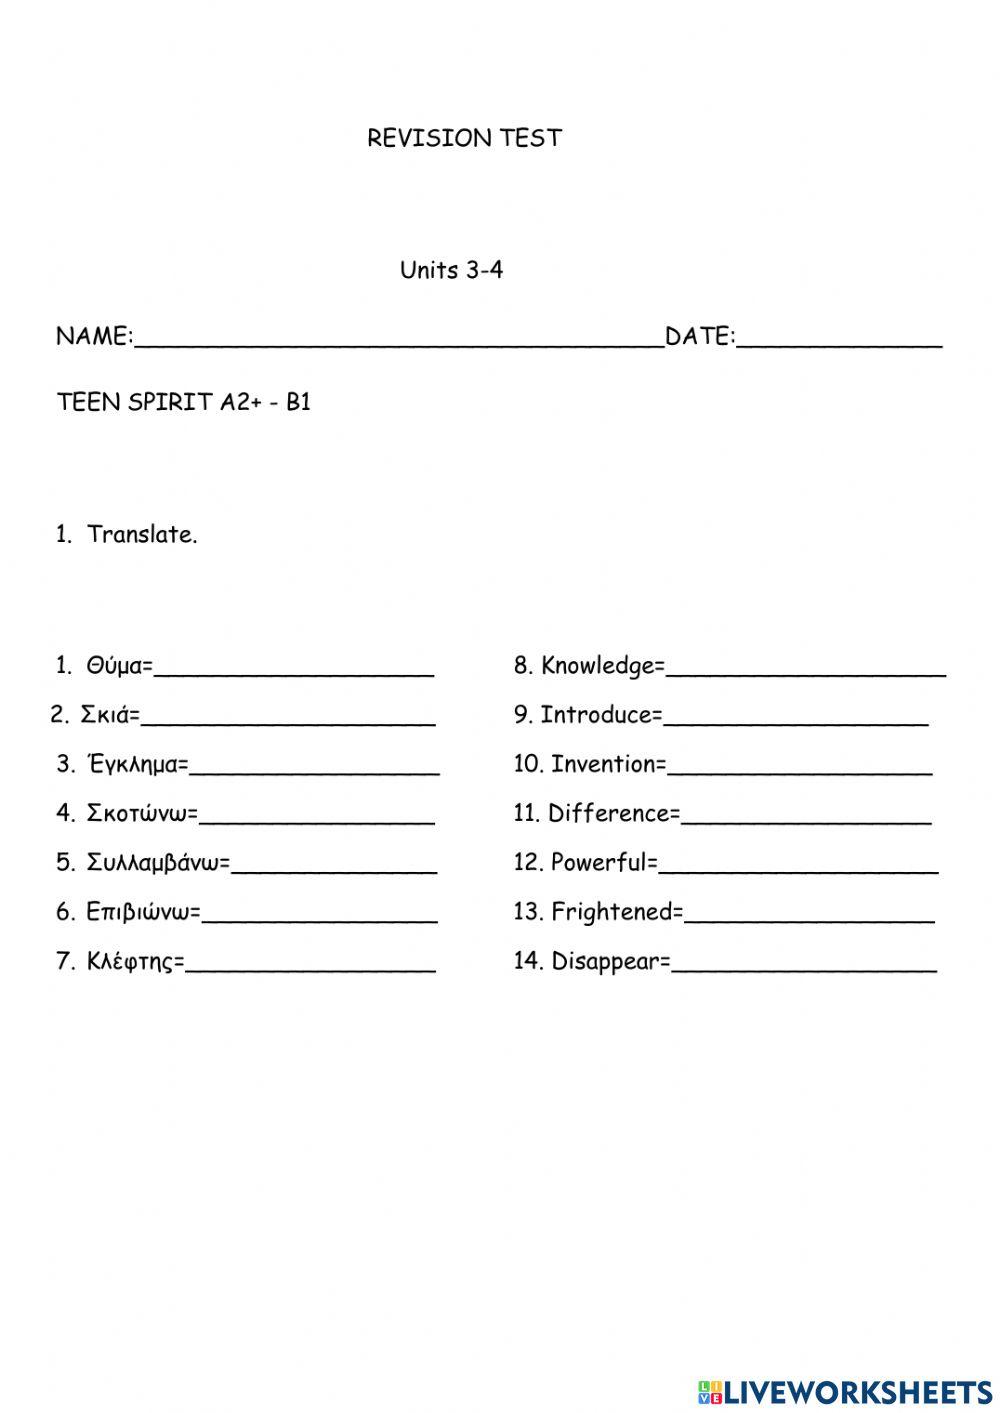 Teen spirit: units 3-4